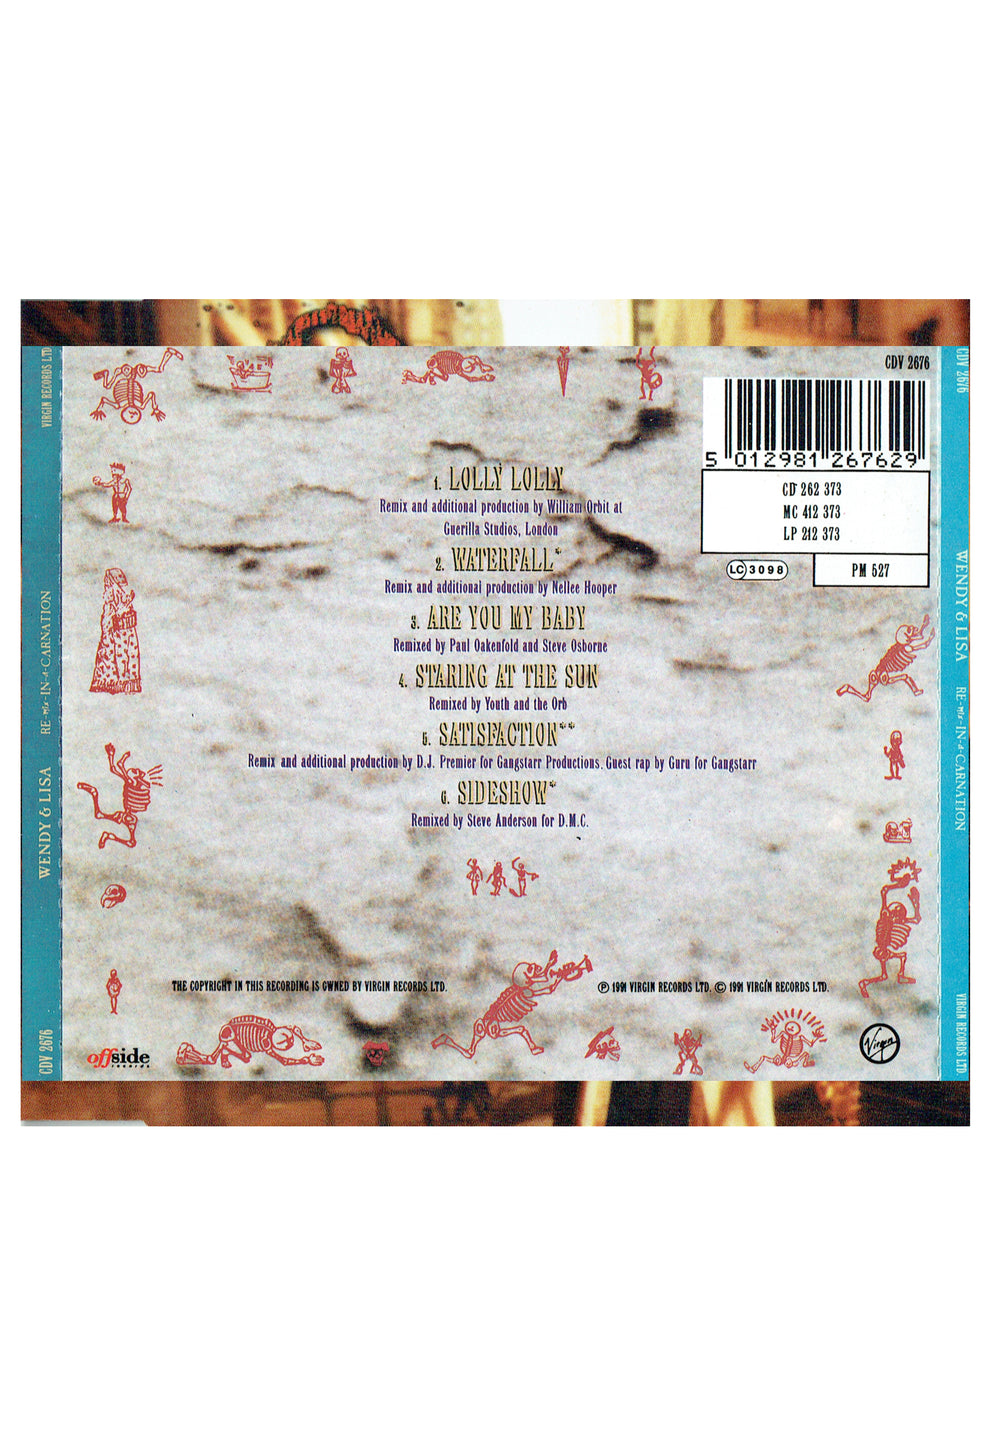 Prince – Wendy & Lisa Re Mix In A Carnation UK Remix CD Album 6 Tracks Preloved:1991